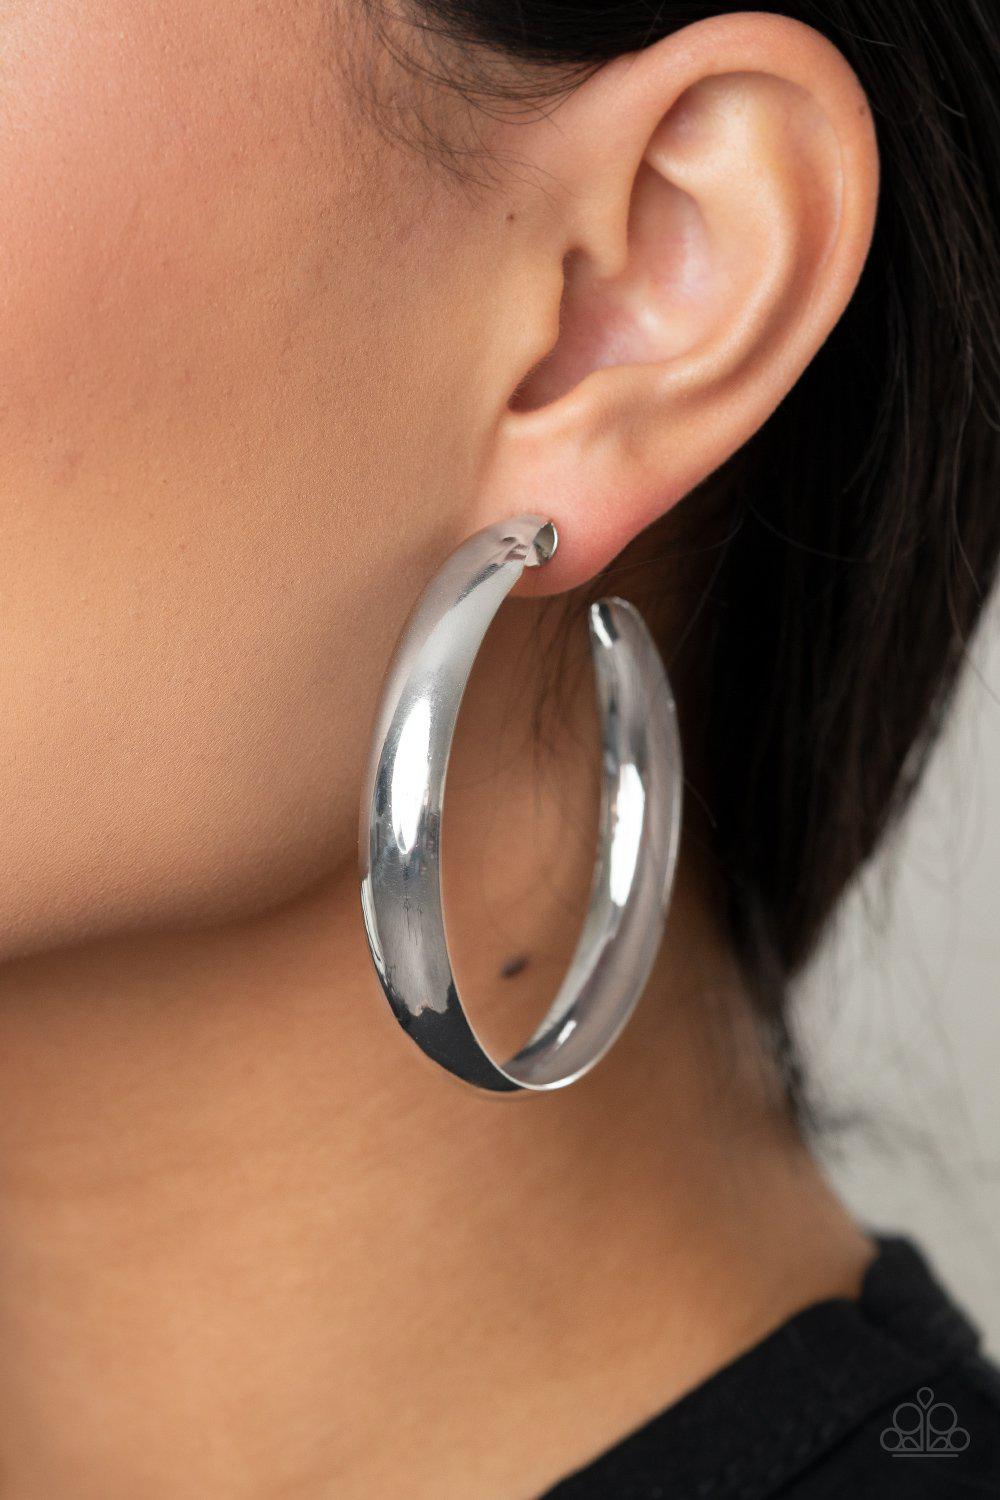 BEVEL In It Silver Hoop Earrings - Paparazzi Accessories - model -CarasShop.com - $5 Jewelry by Cara Jewels